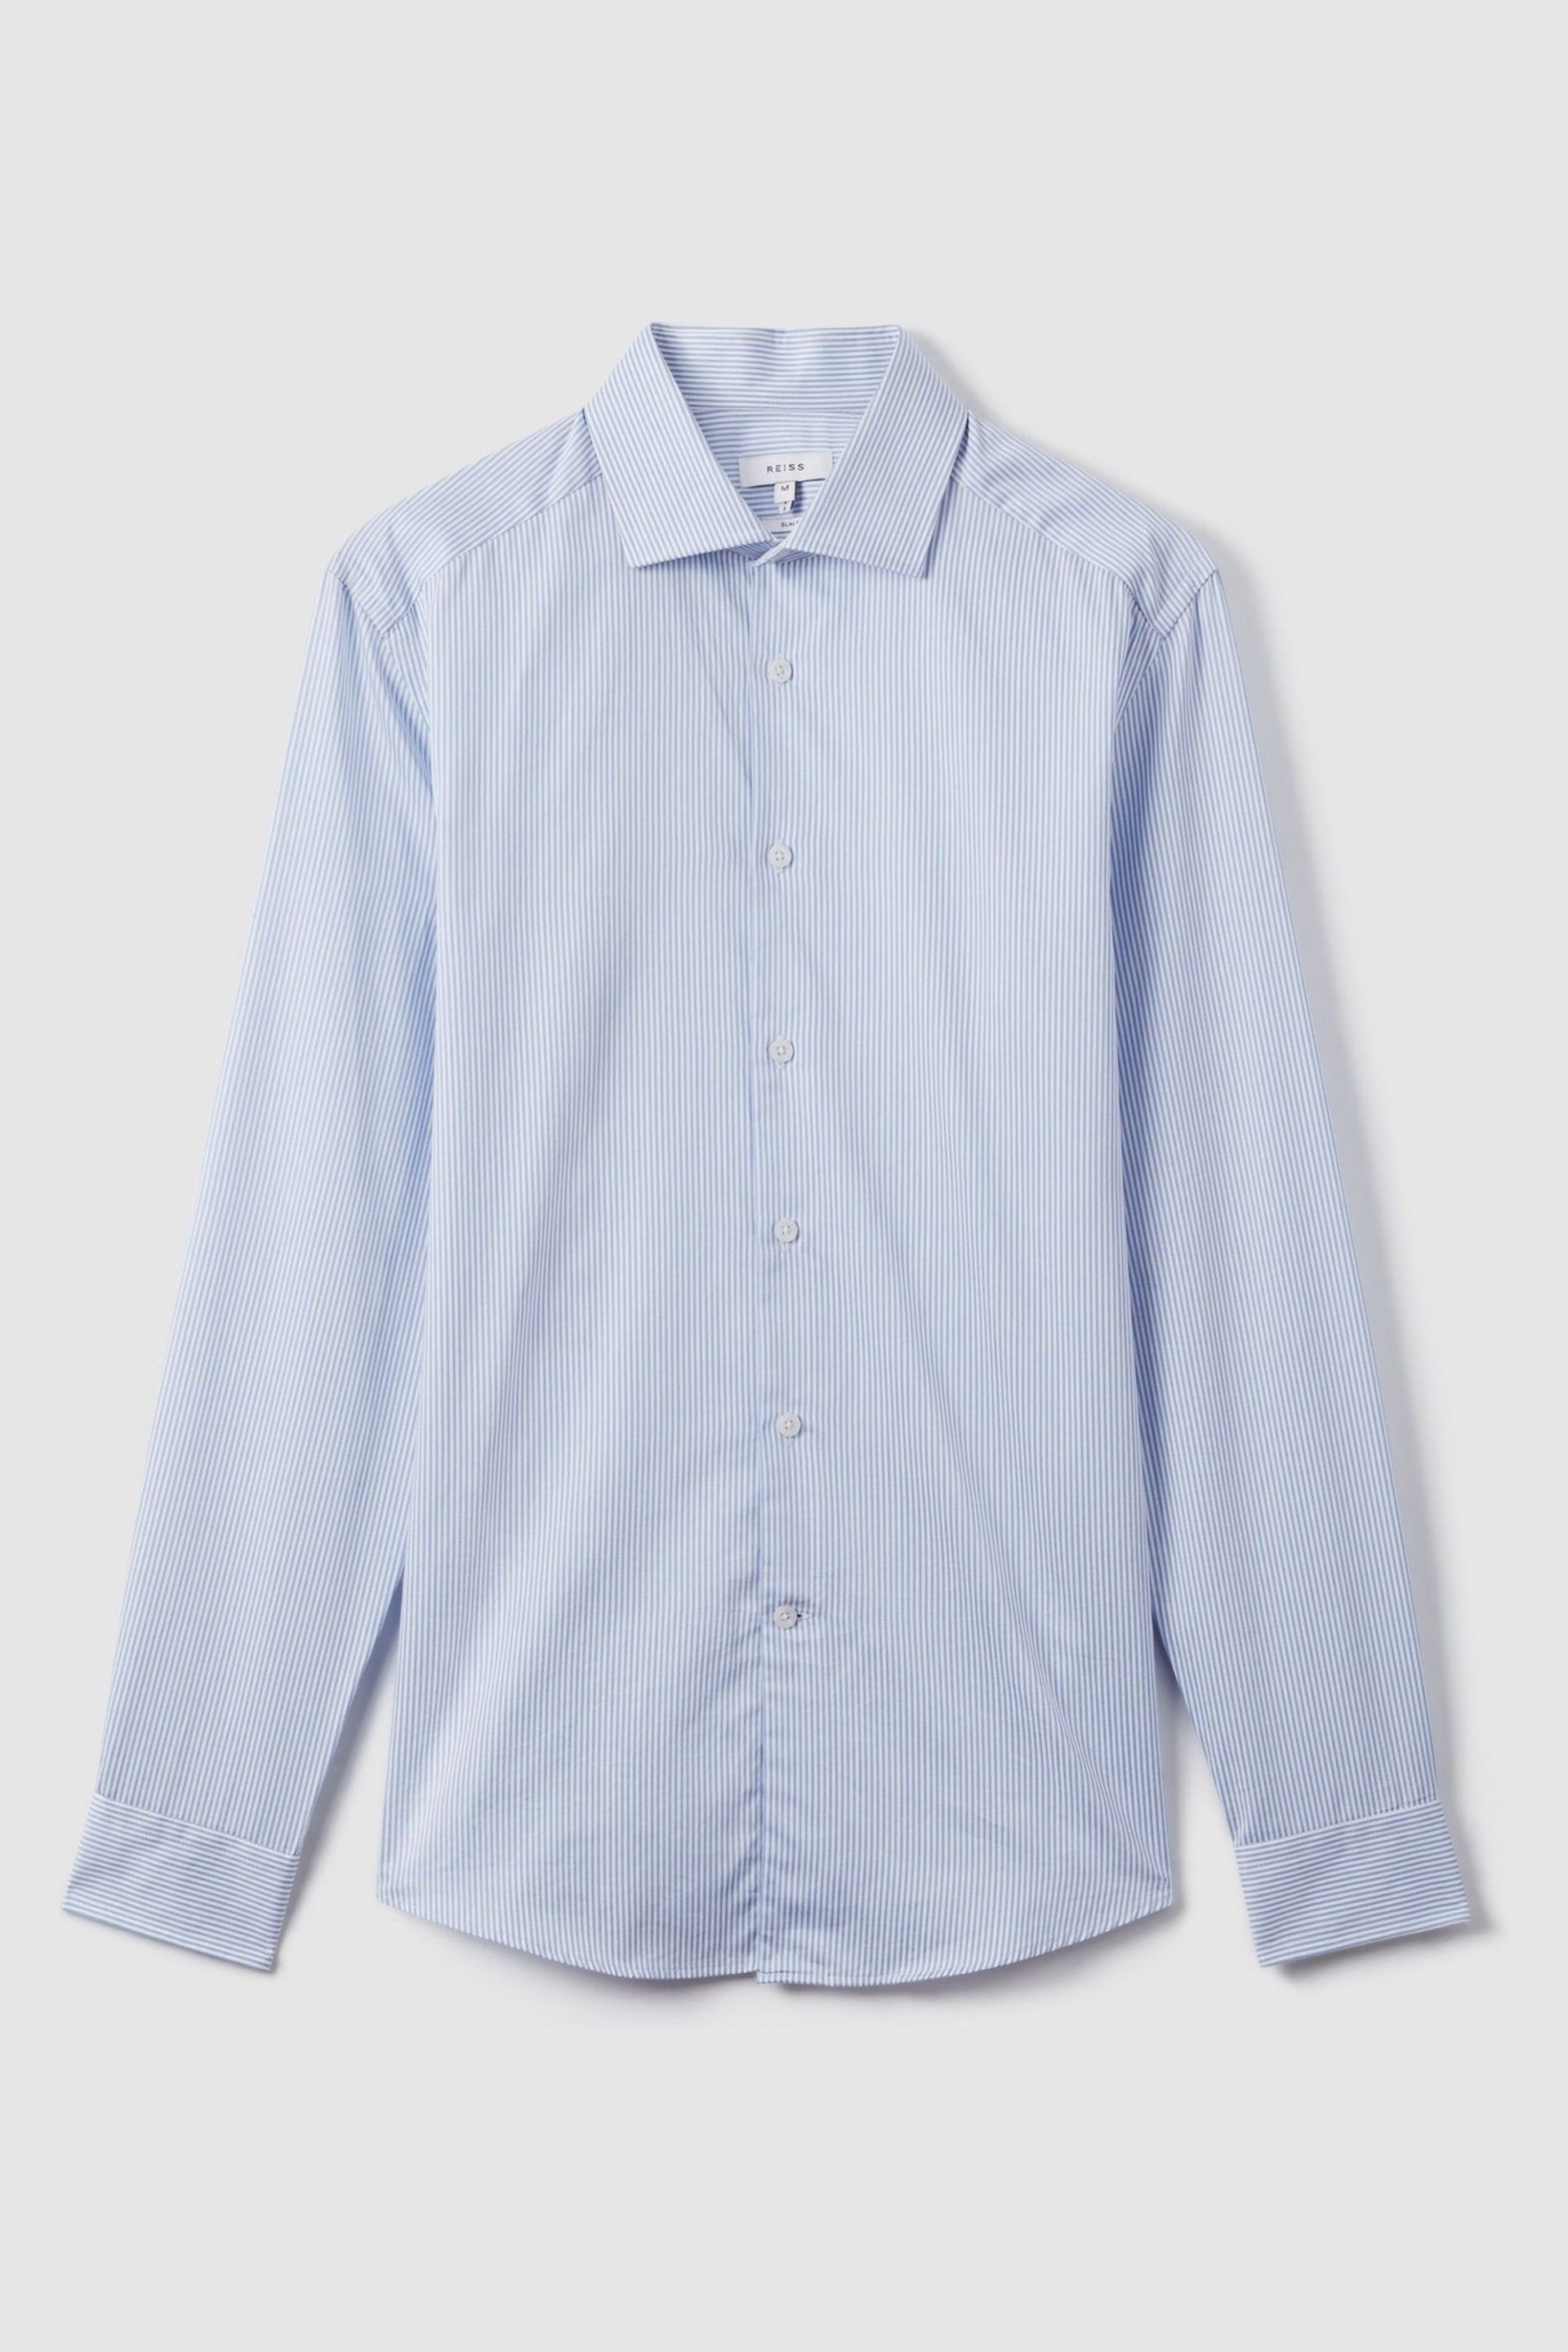 Reiss Blue Stripe Remote Slim Fit Cotton Sateen Shirt - Image 2 of 5